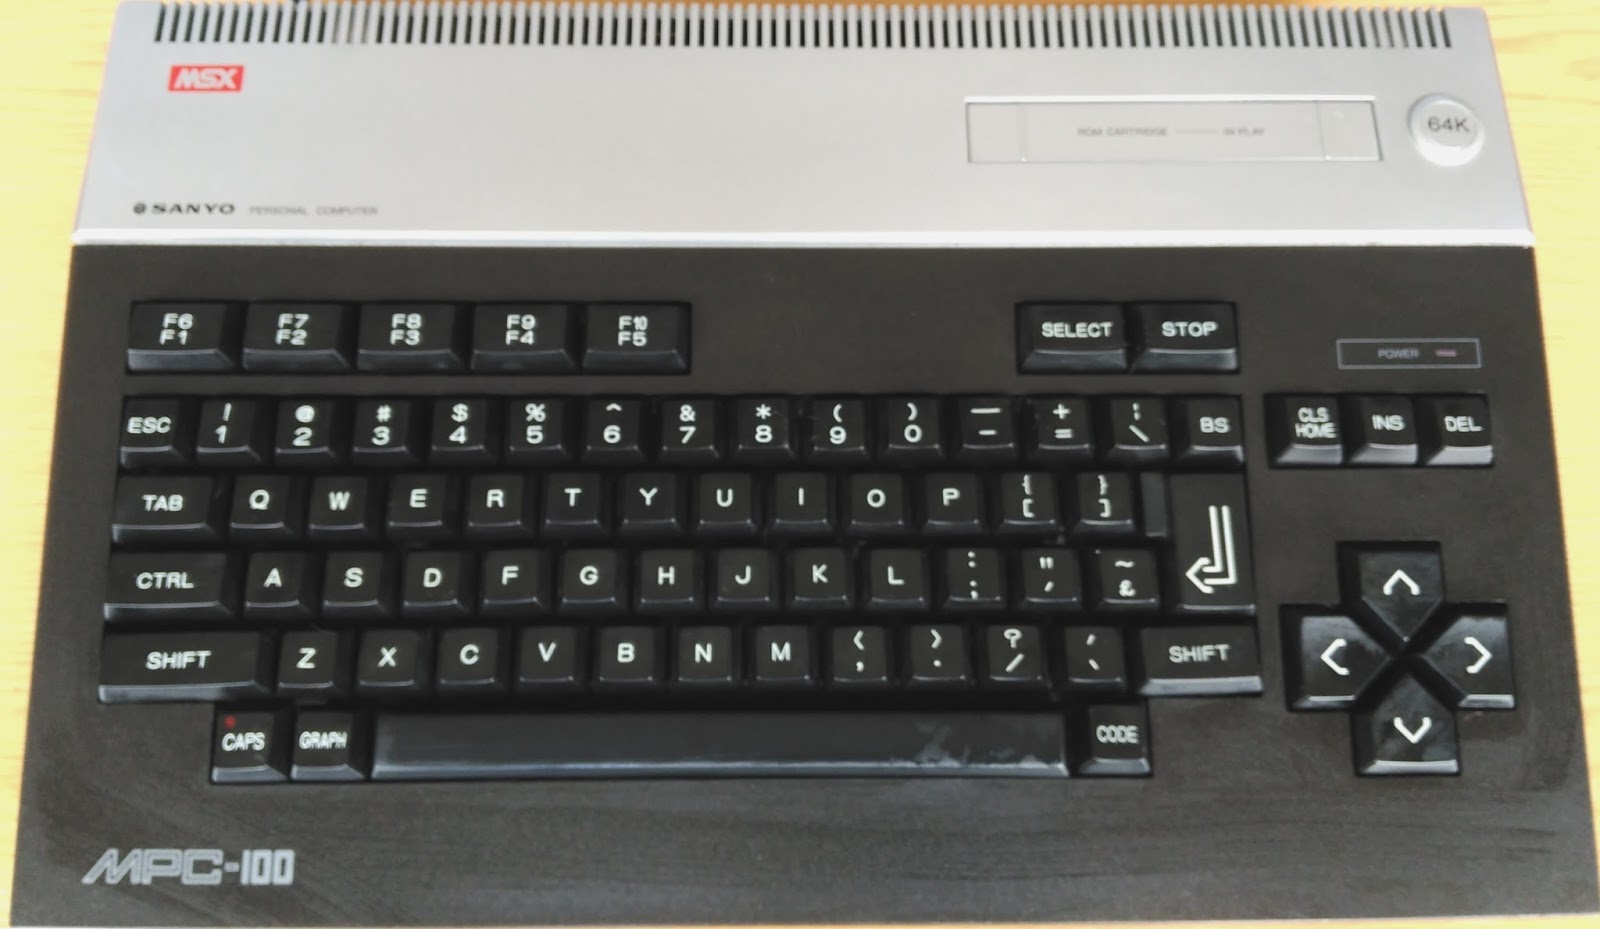 SANYO MSX MPC-10